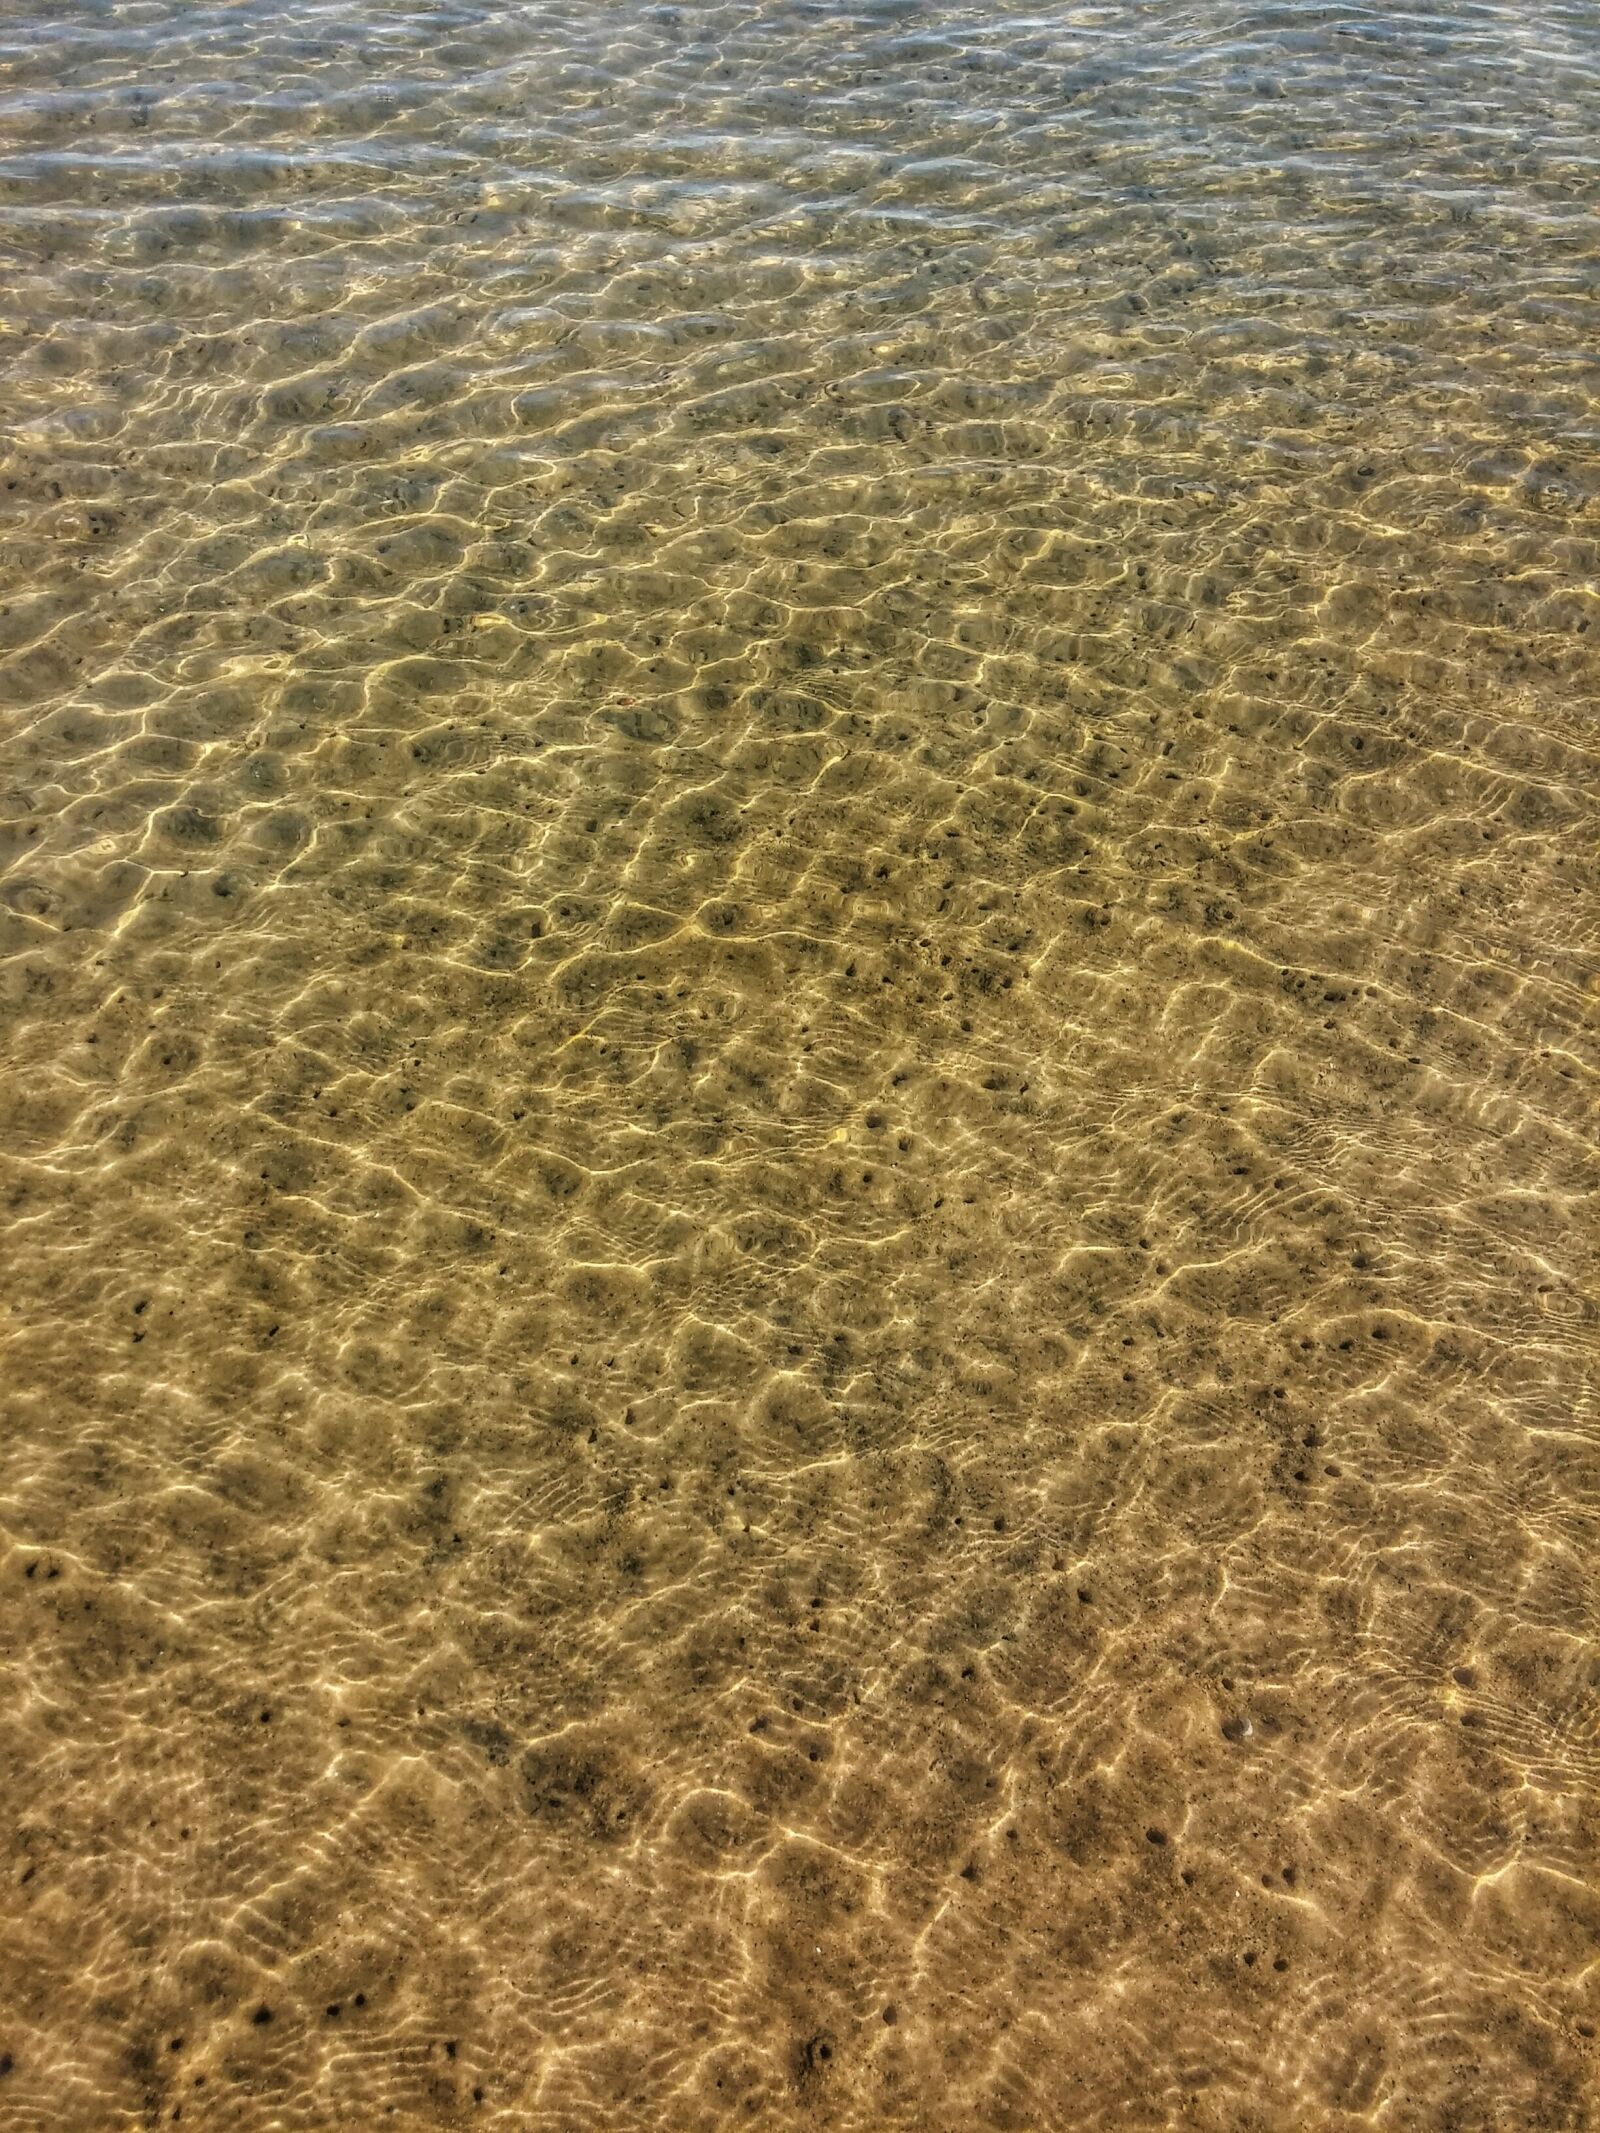 LG D80 sample photo. Water, sand, still photography